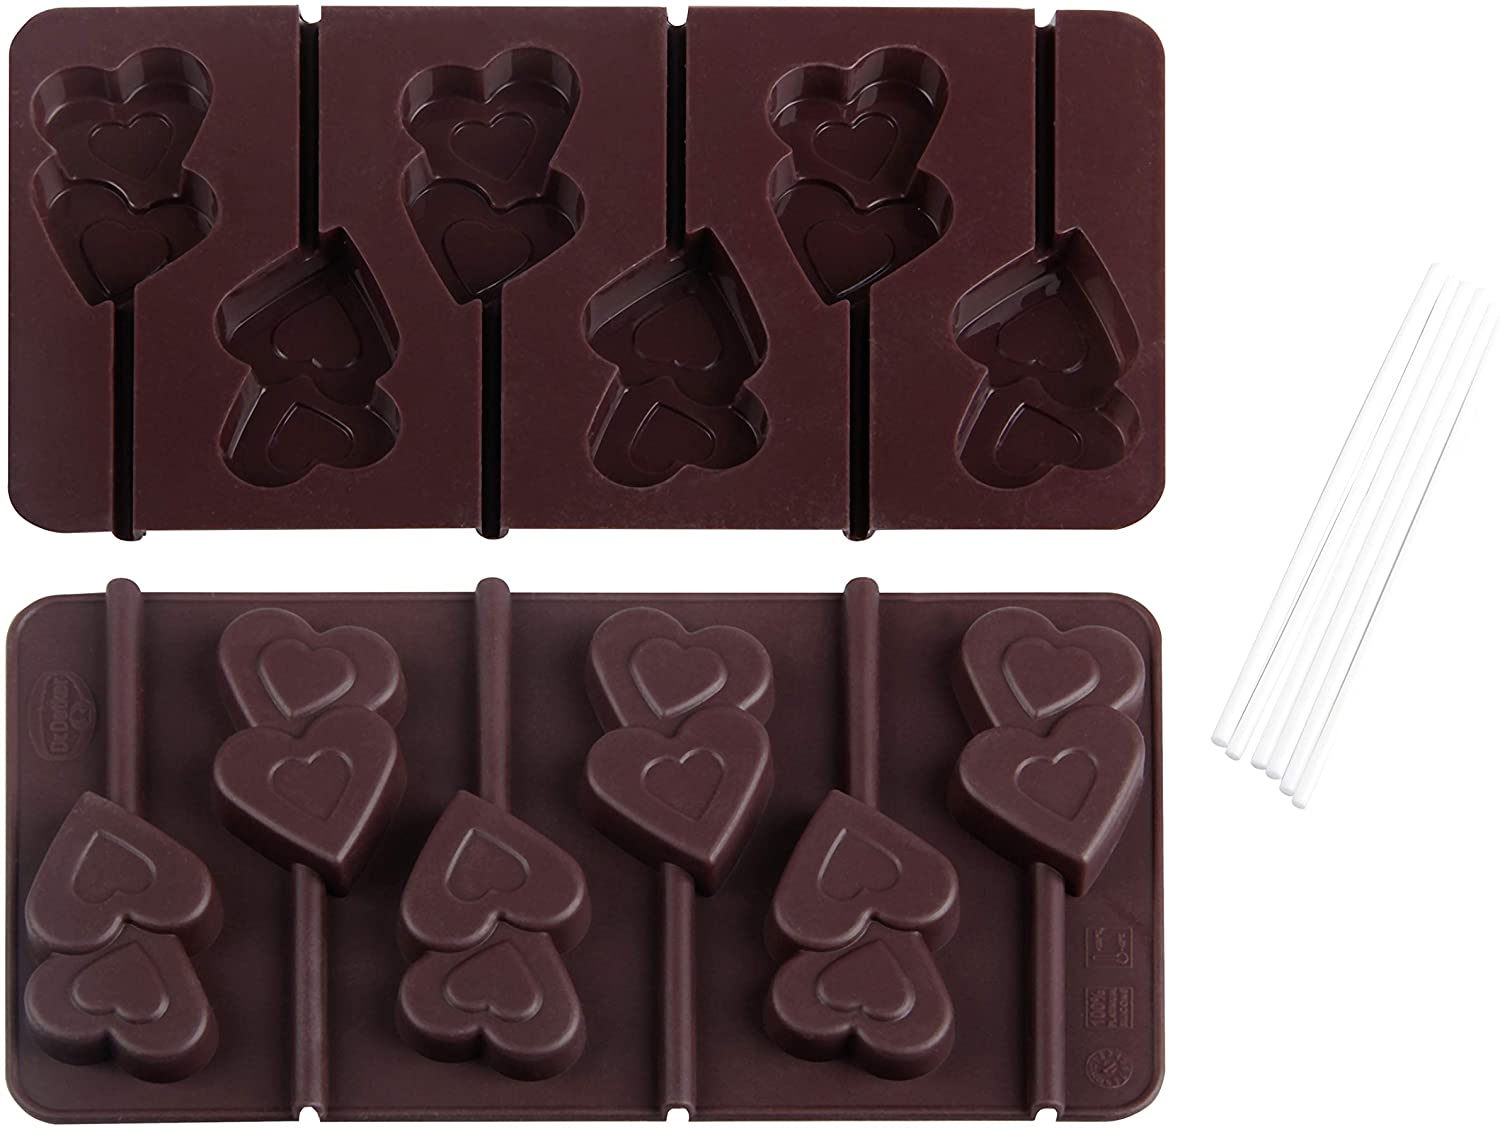 Dr. Oetker silicone chocolate mold Lollipop Hearts set of 2 incl. 12 sticks, (color: brown) - dishwasher safe, quantity: 1 x set of 2